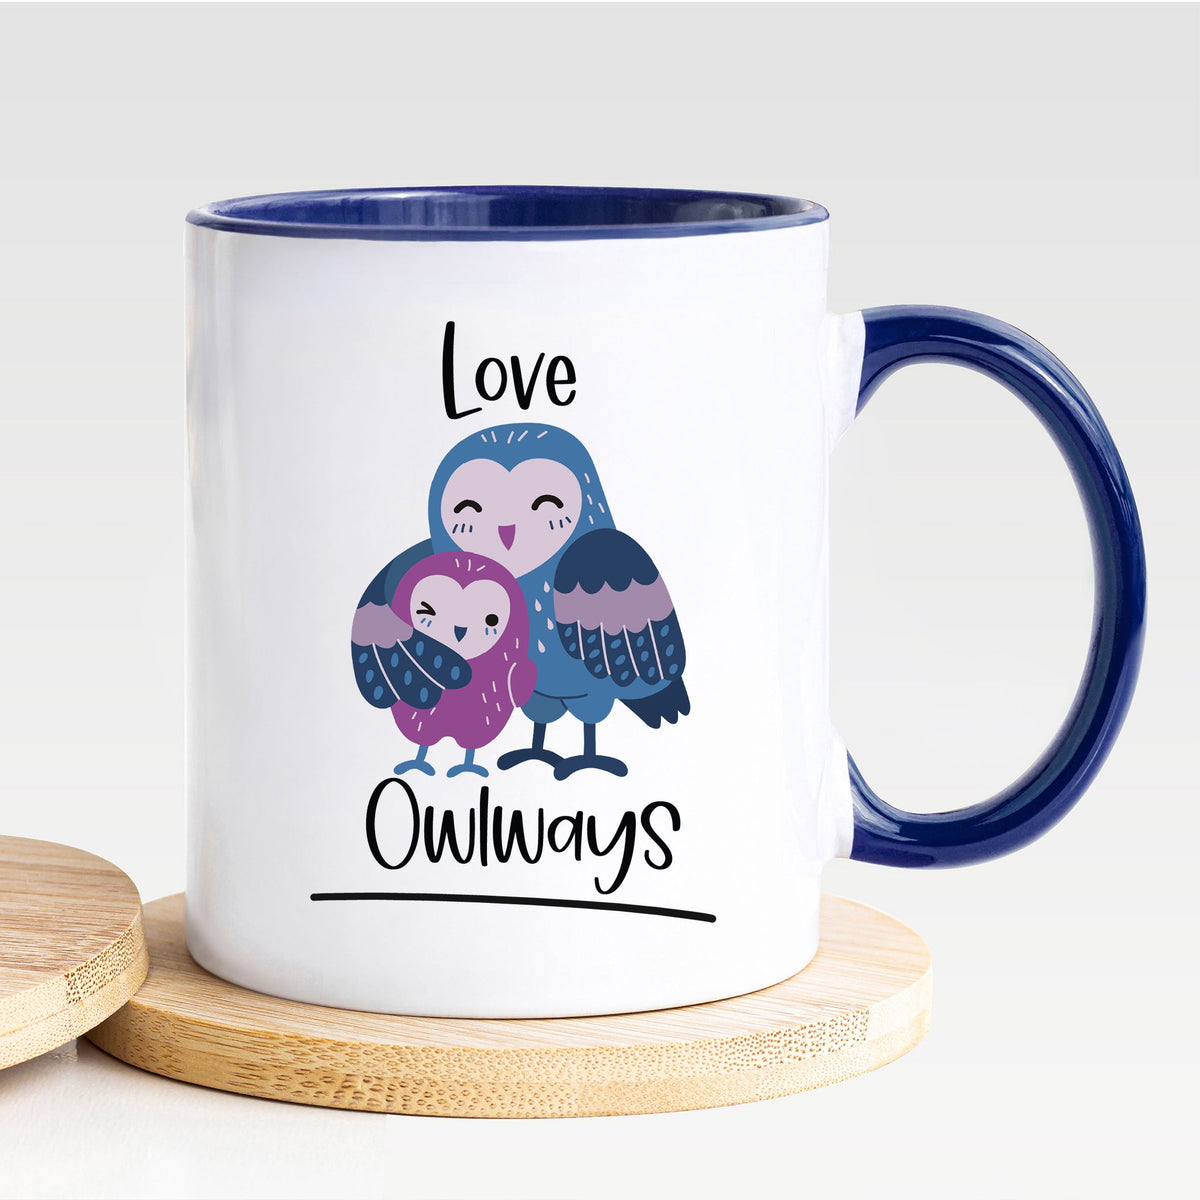 Love Owlways - Mug